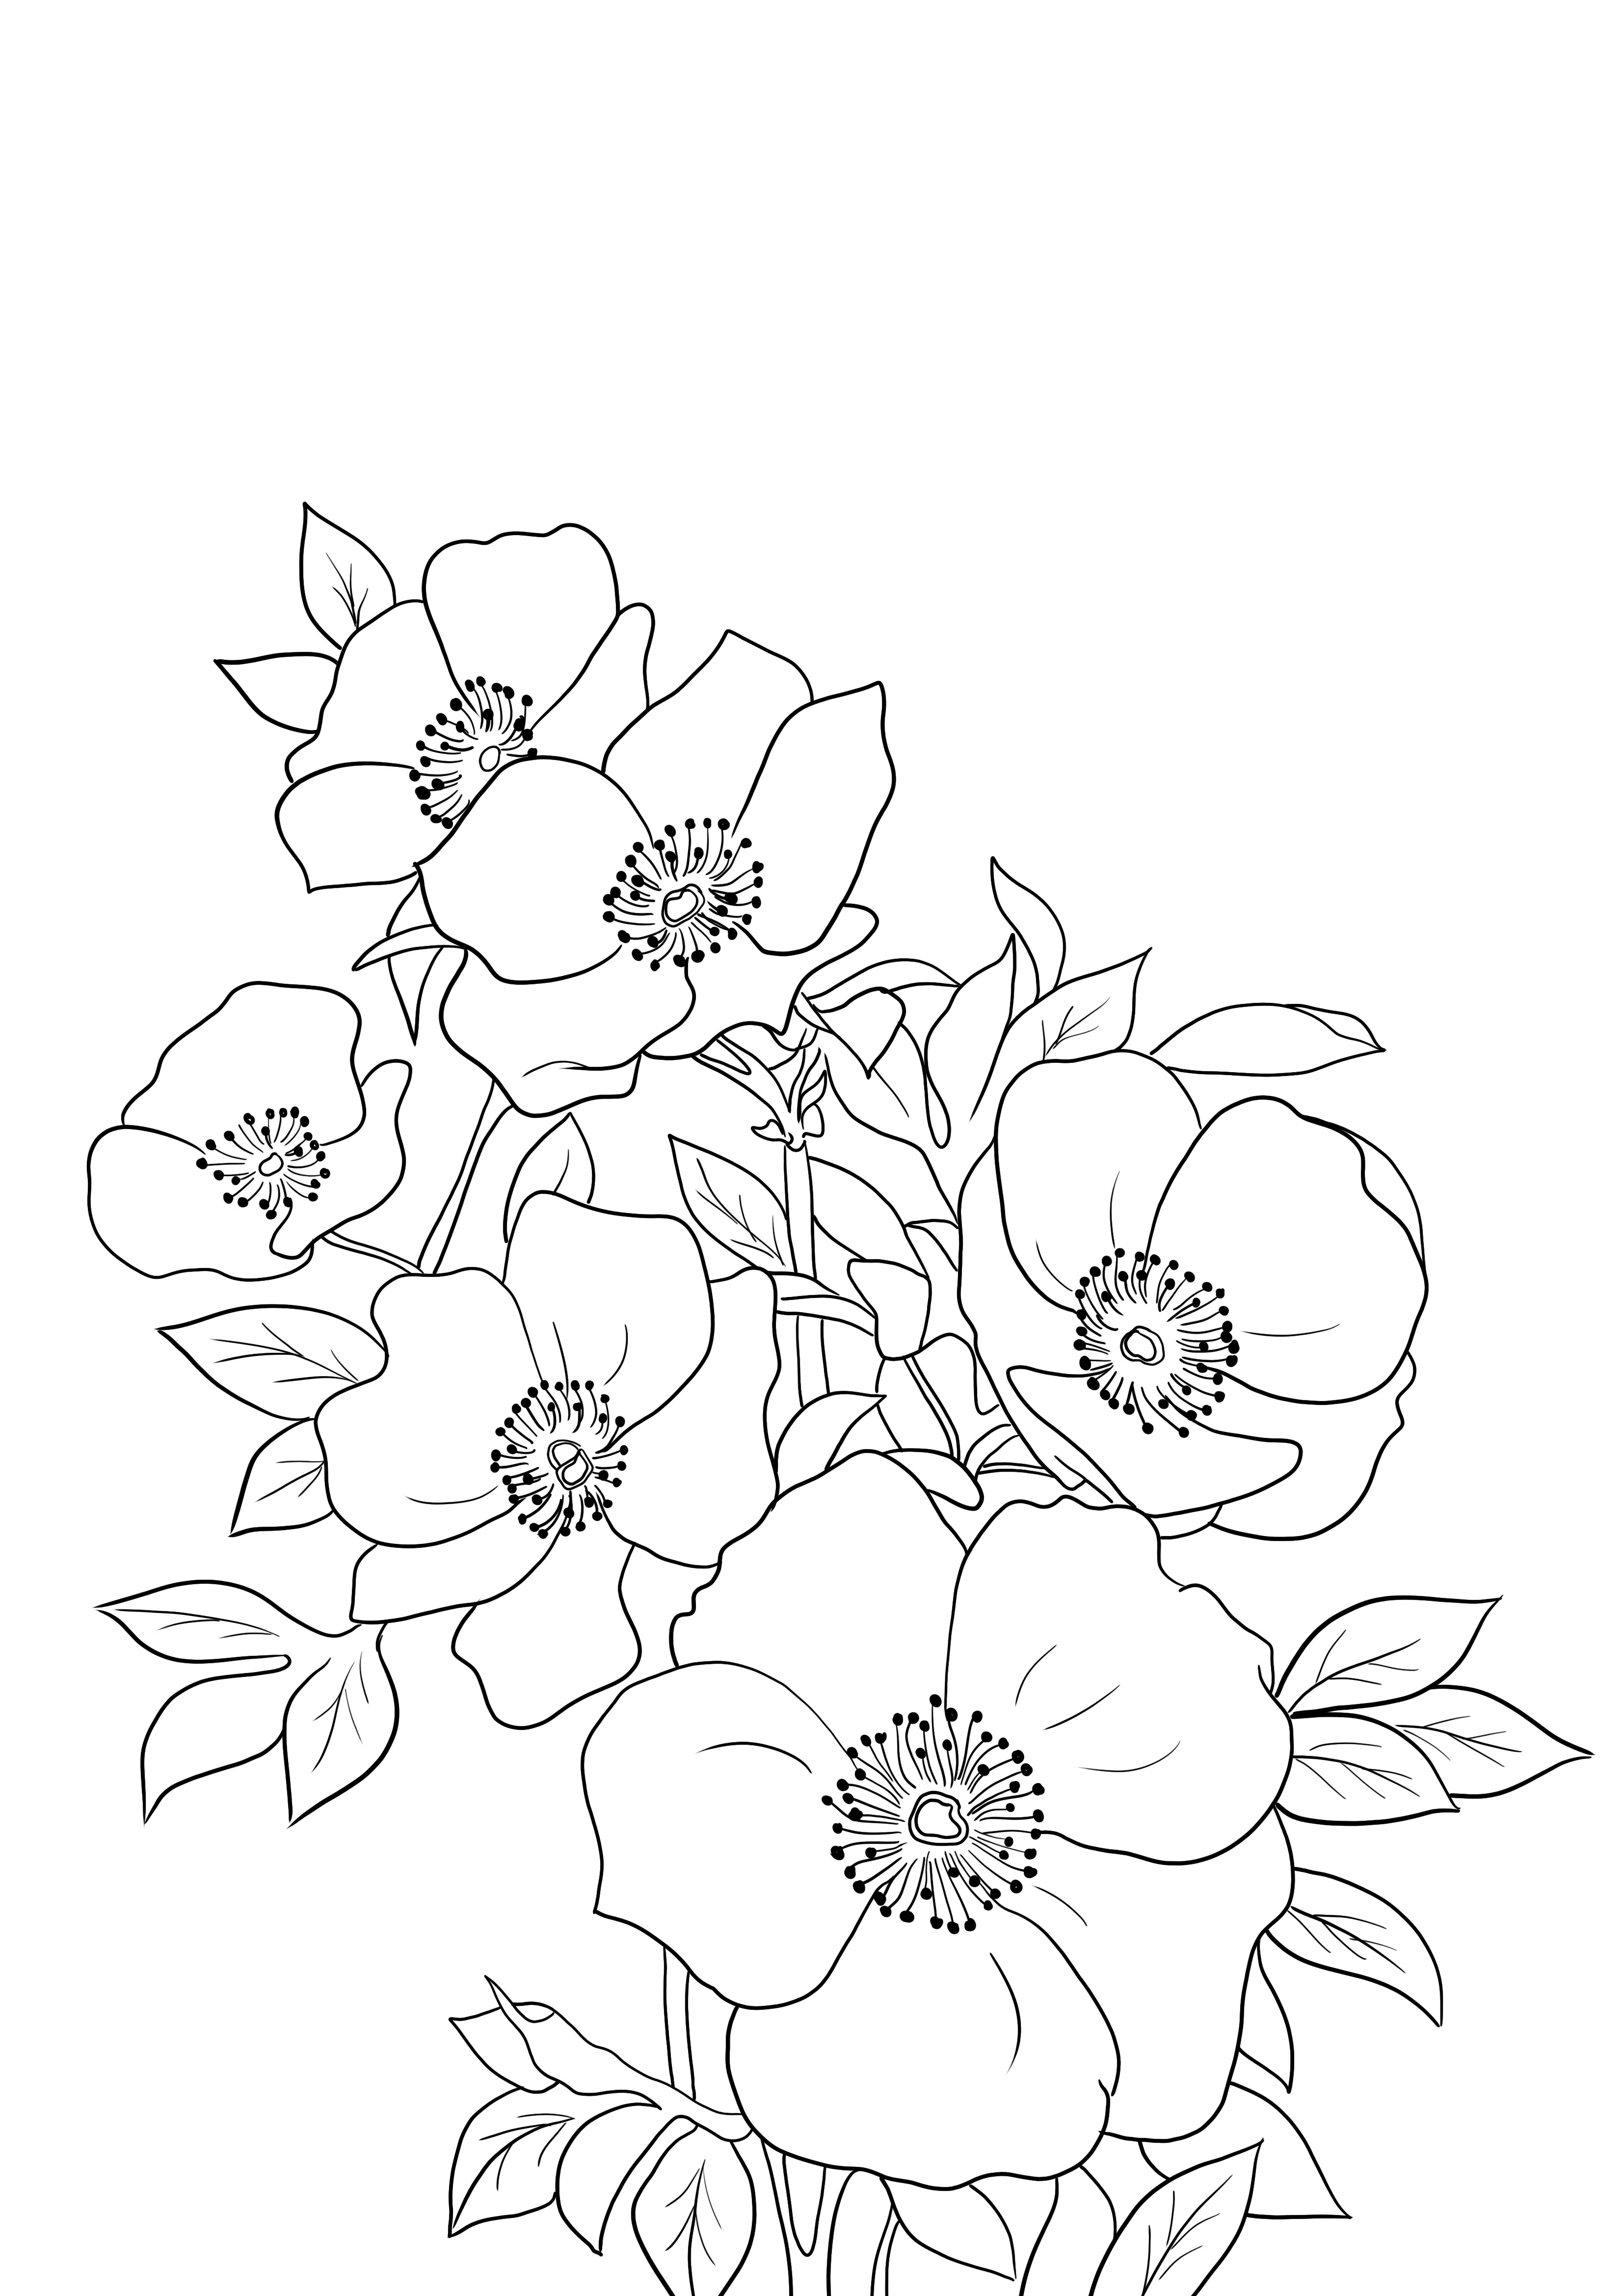 Cherokee Rose pobierz – drukuj i koloruj za darmo